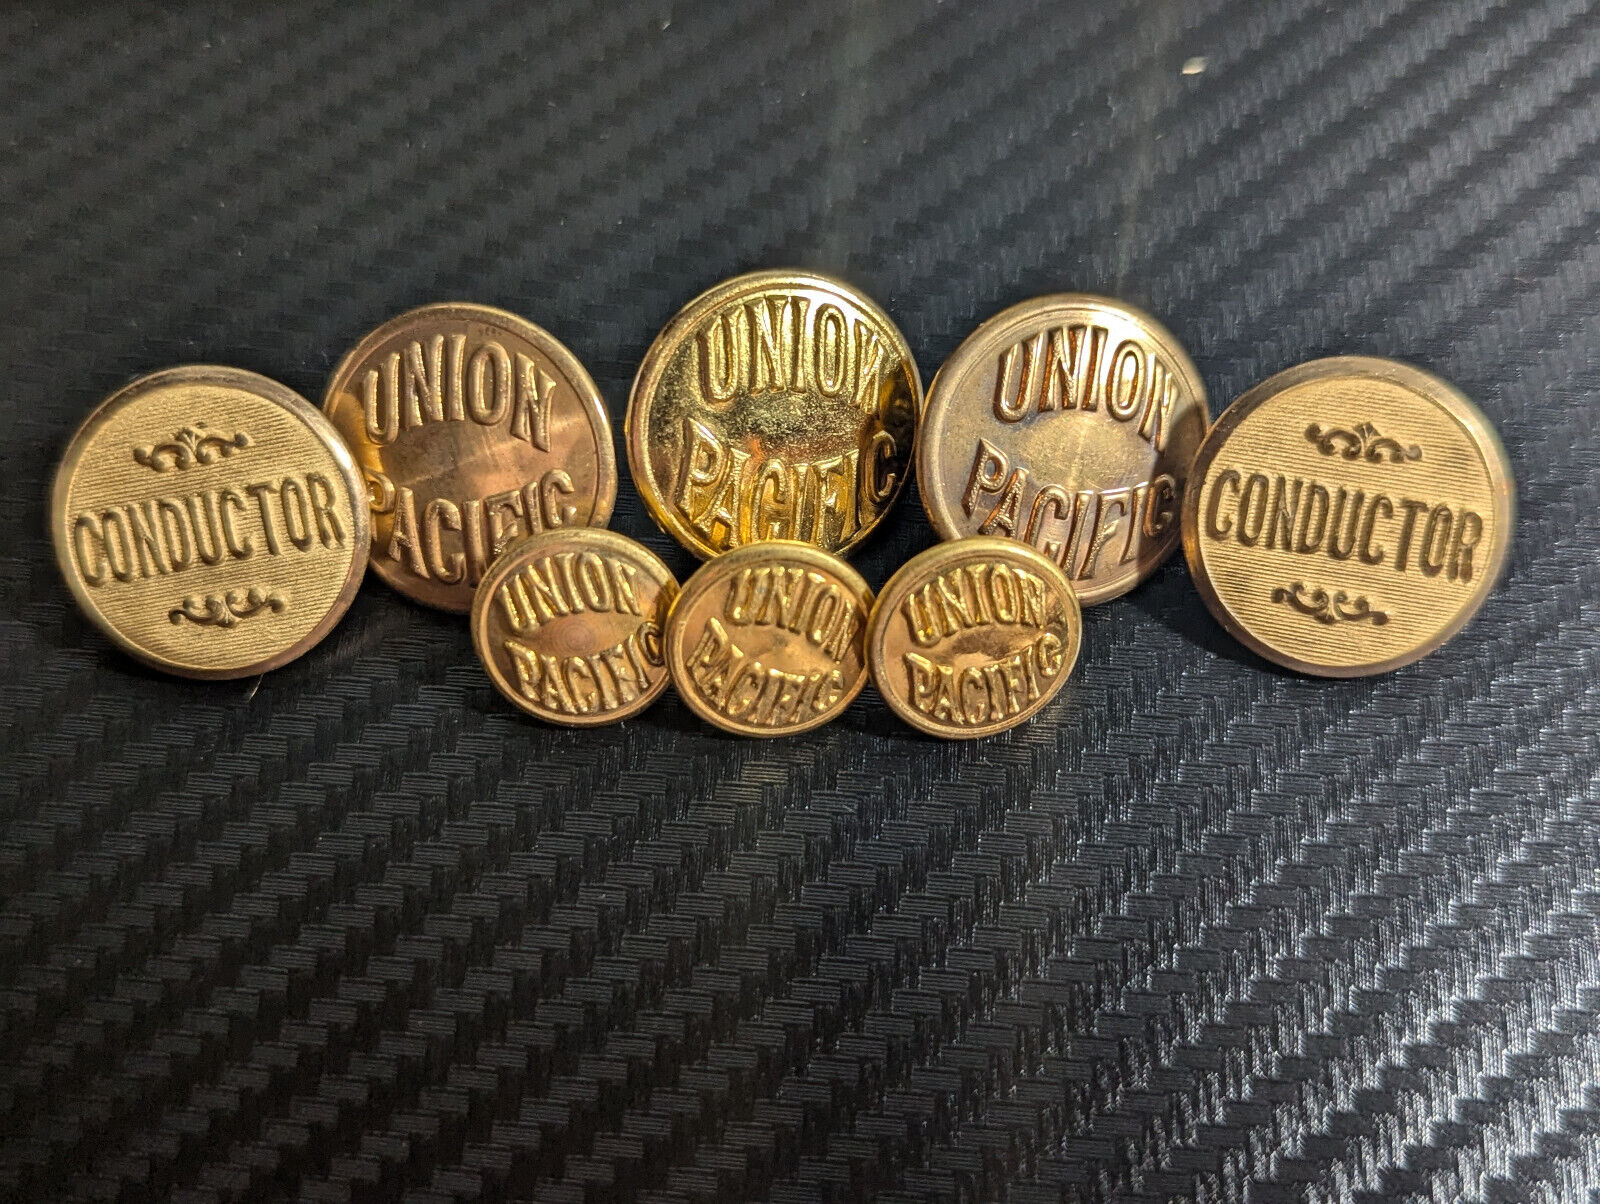 Lot of Union Pacific Railroad Uniform Buttons with Conductors Vintage A3